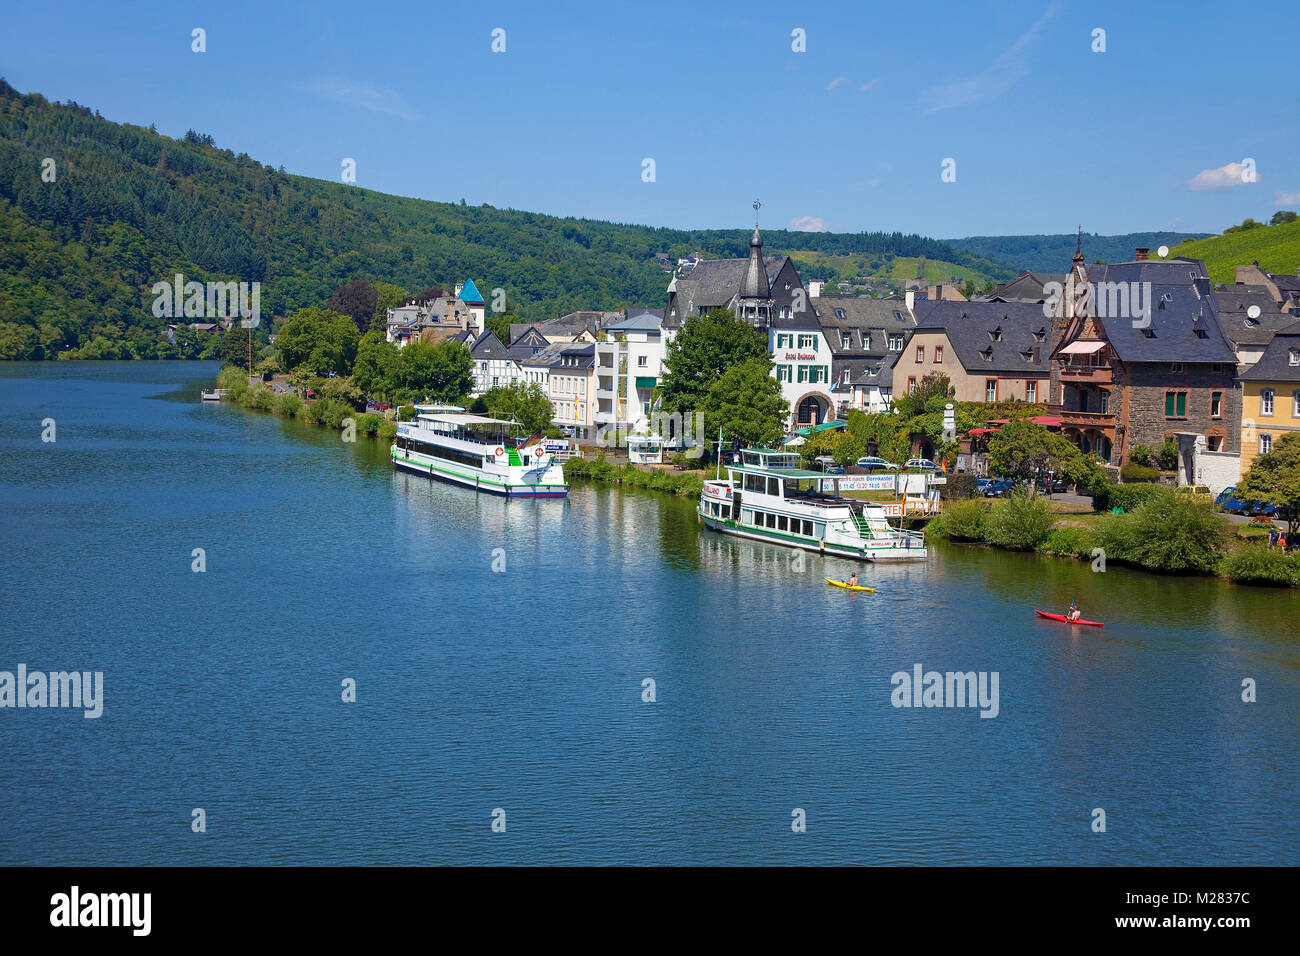 Excursion ships at gangway, riverside at Traben-Trarbach, Moselle river, Rhineland-Palatinate, Germany, Europe Stock Photo